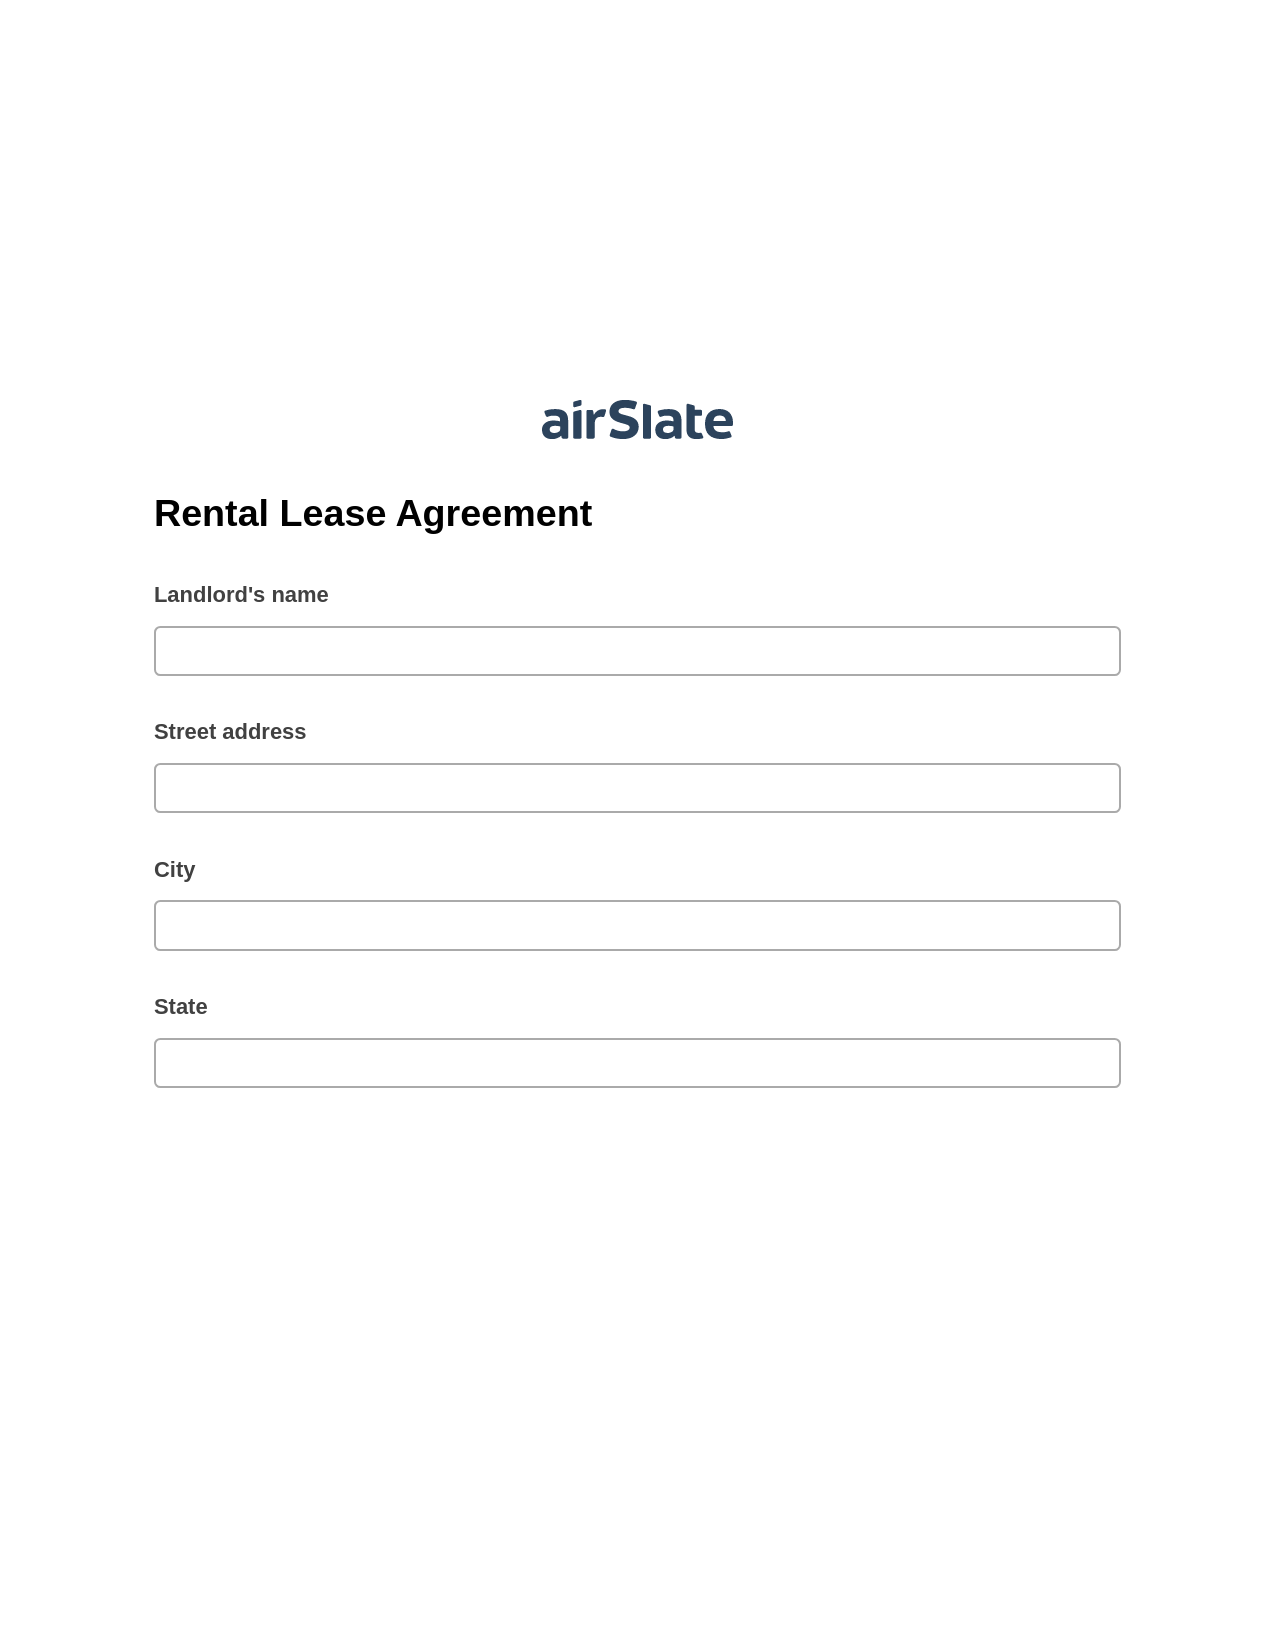 Rental Lease Agreement Pre-fill from MySQL Dropdown Options Bot, Create Slate every Google Sheet Update Bot, Export to Google Sheet Bot